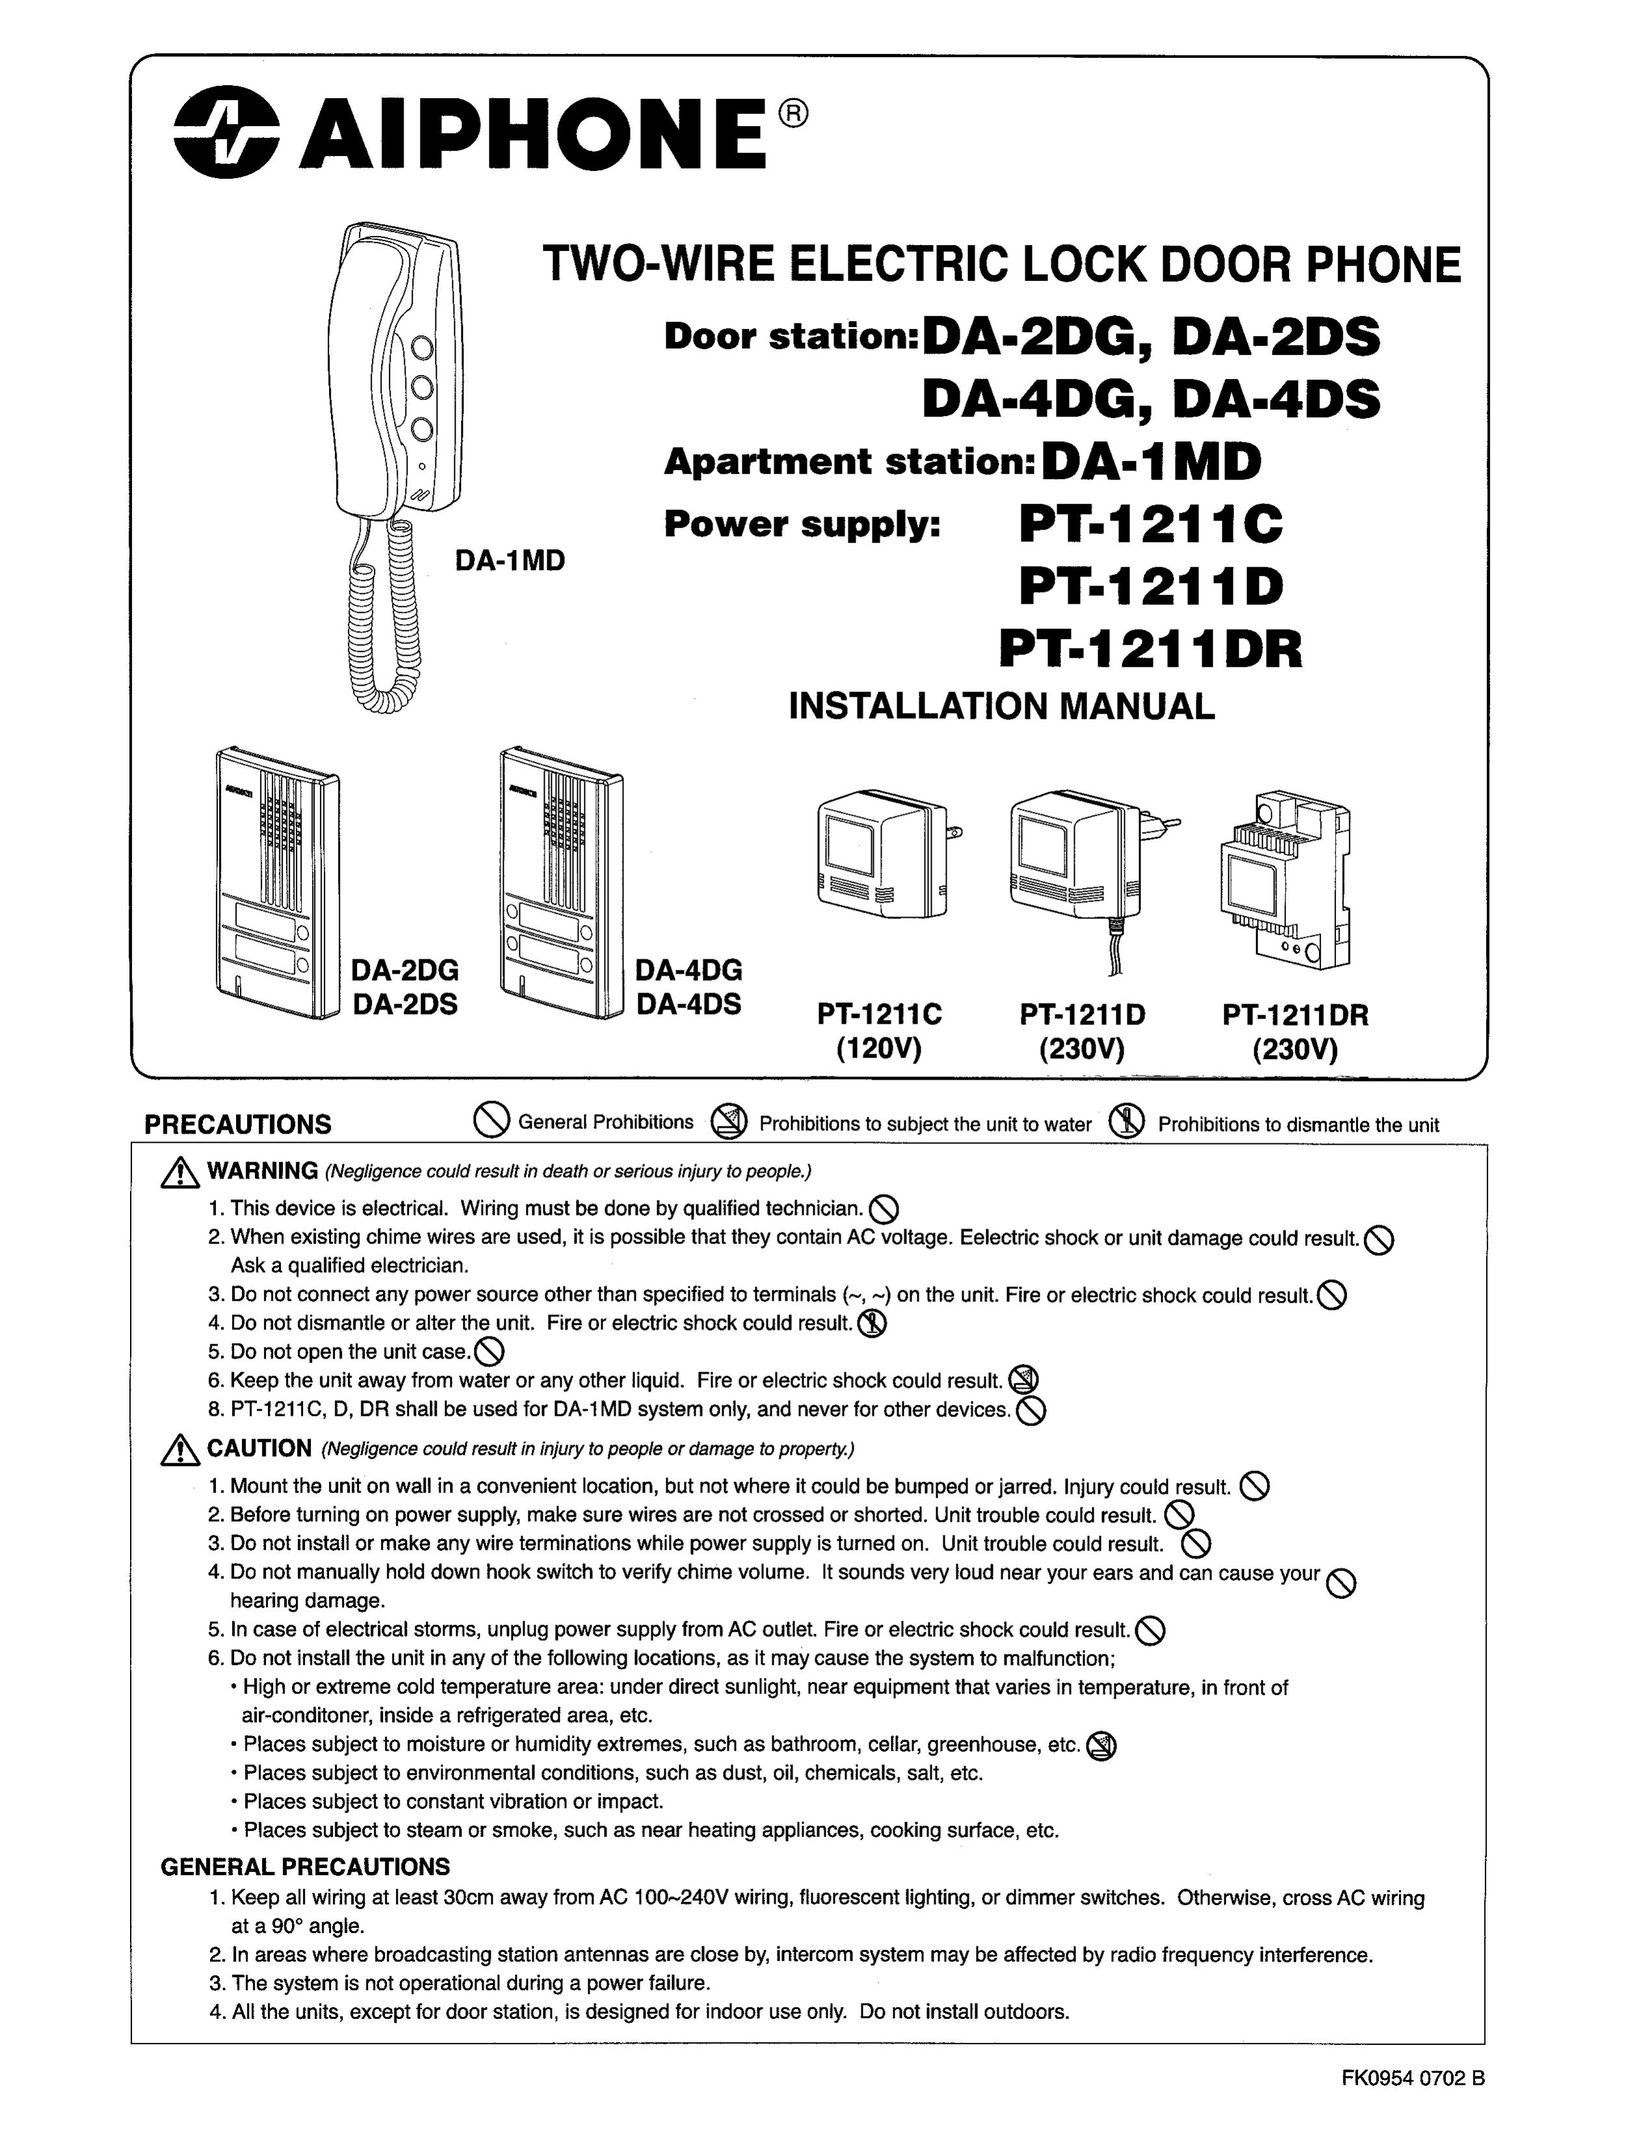 Aiphone DA-4DG Intercom System User Manual